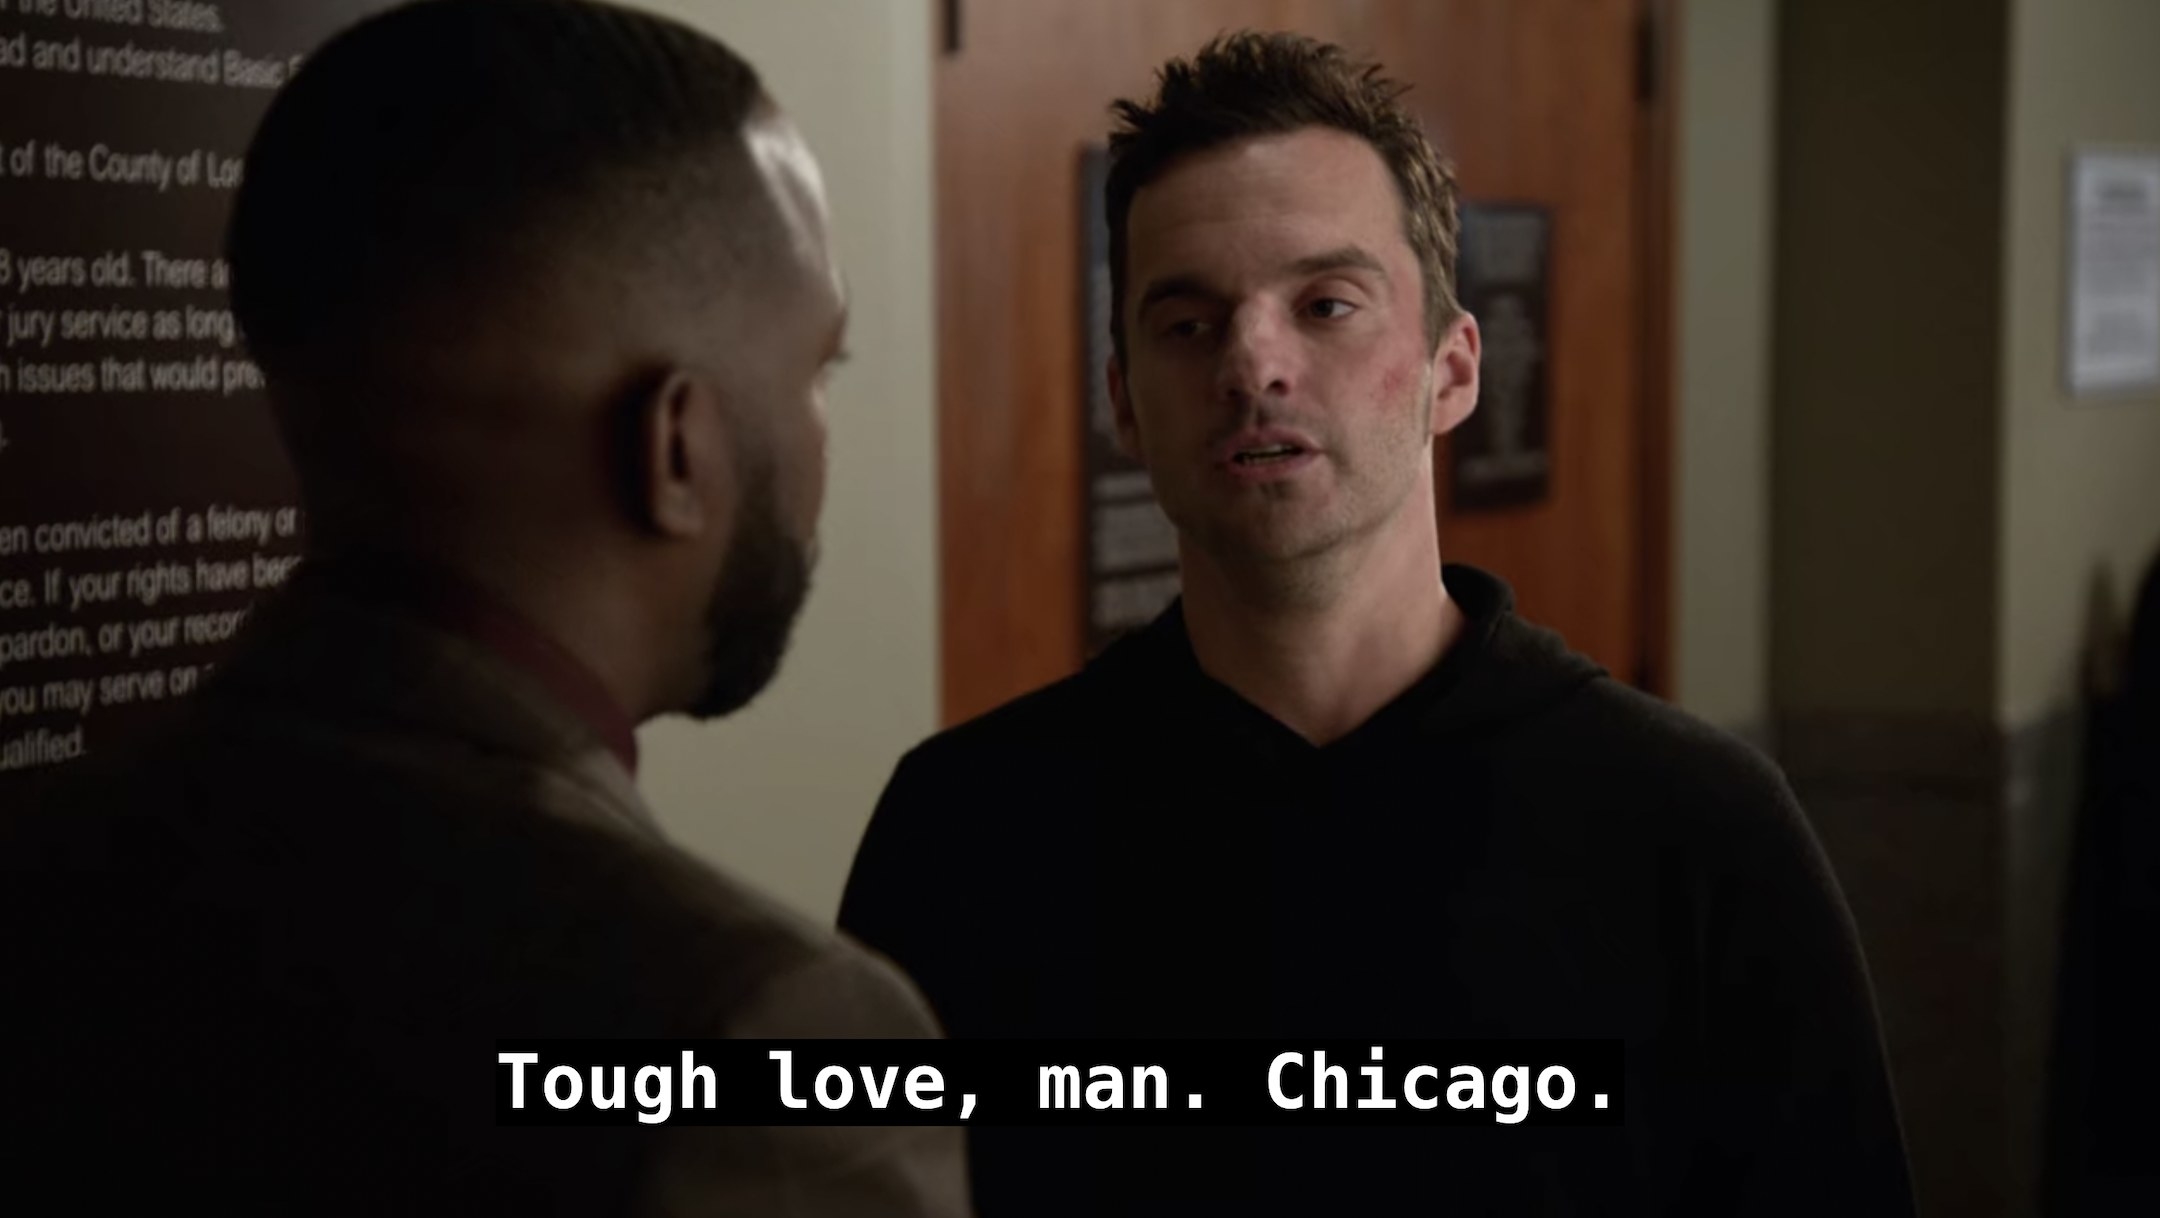 Nick says, Tough love, man, Chicago